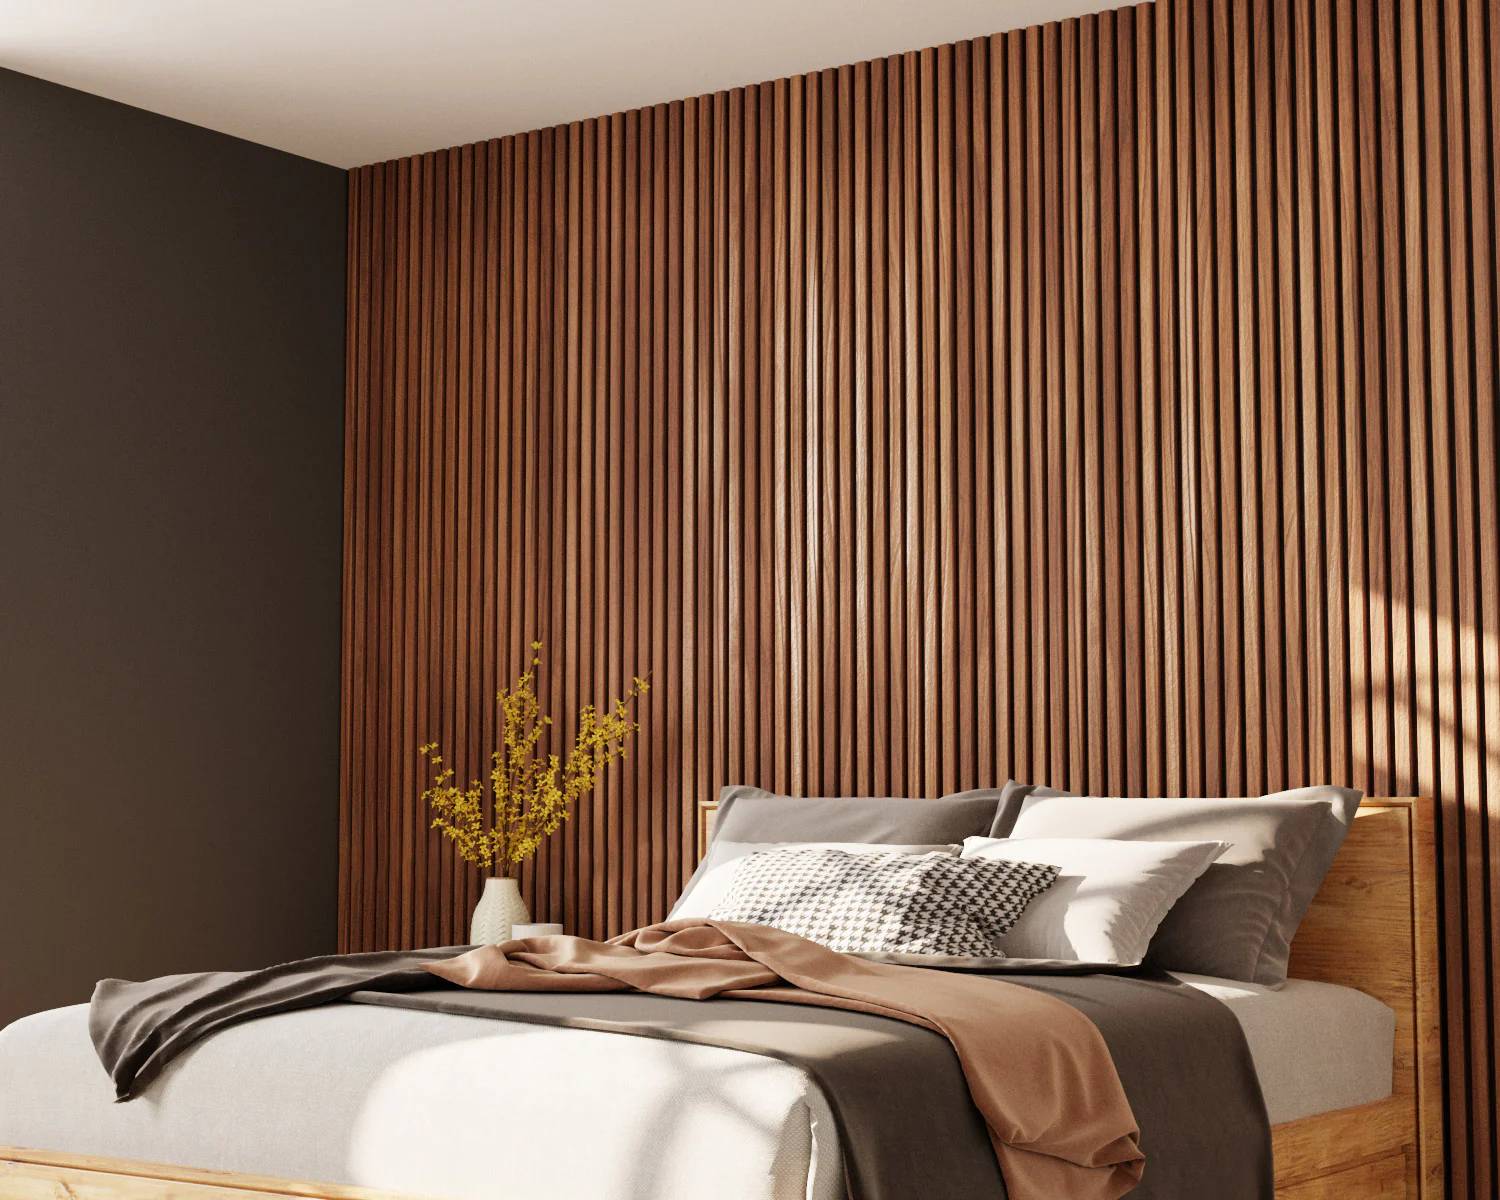 01-vertical-wood-slat-accent-wall-in-minimalist-bedroom